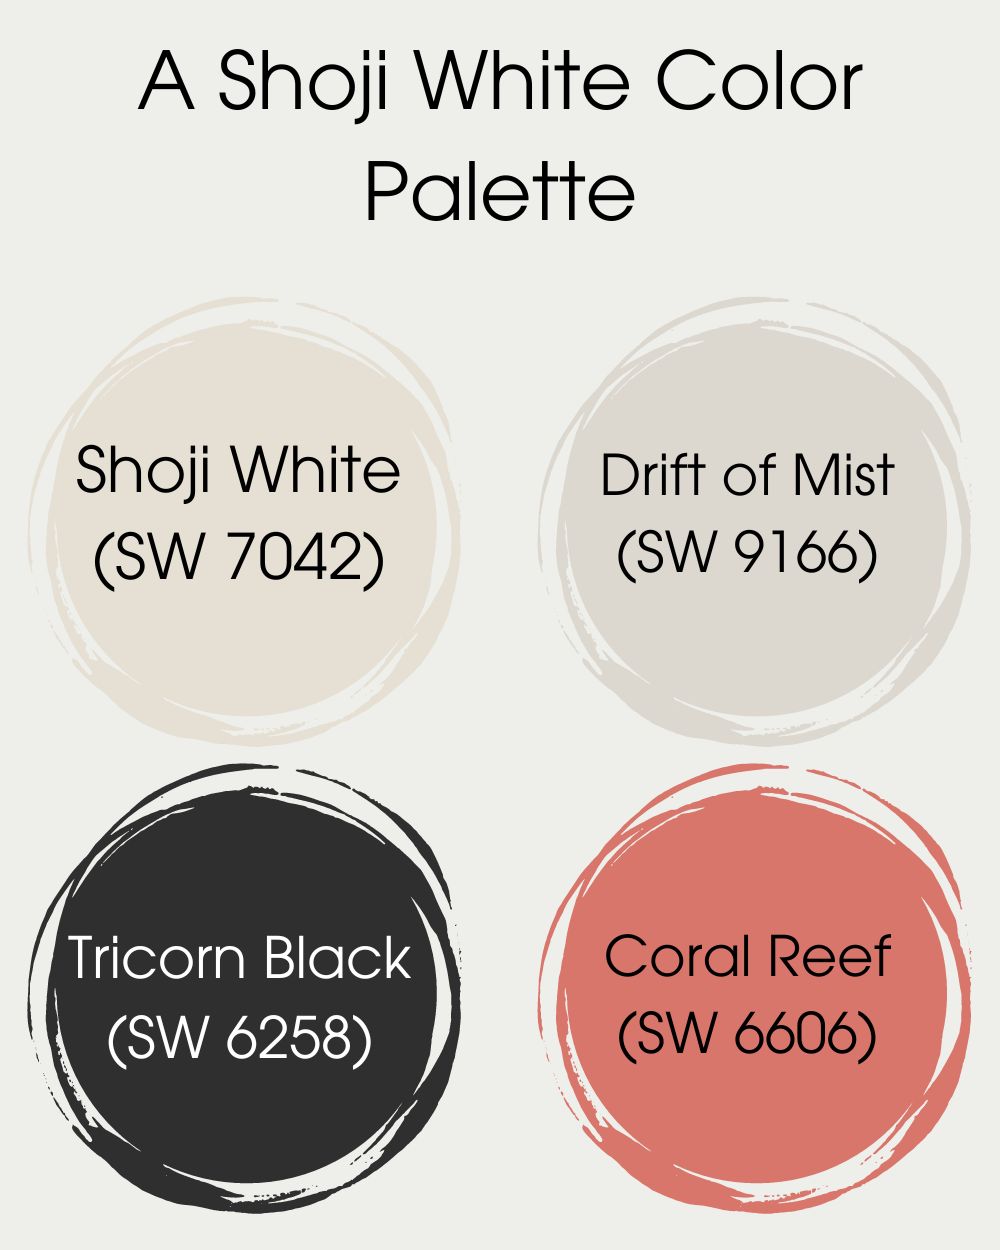 A Shoji White Color Palette